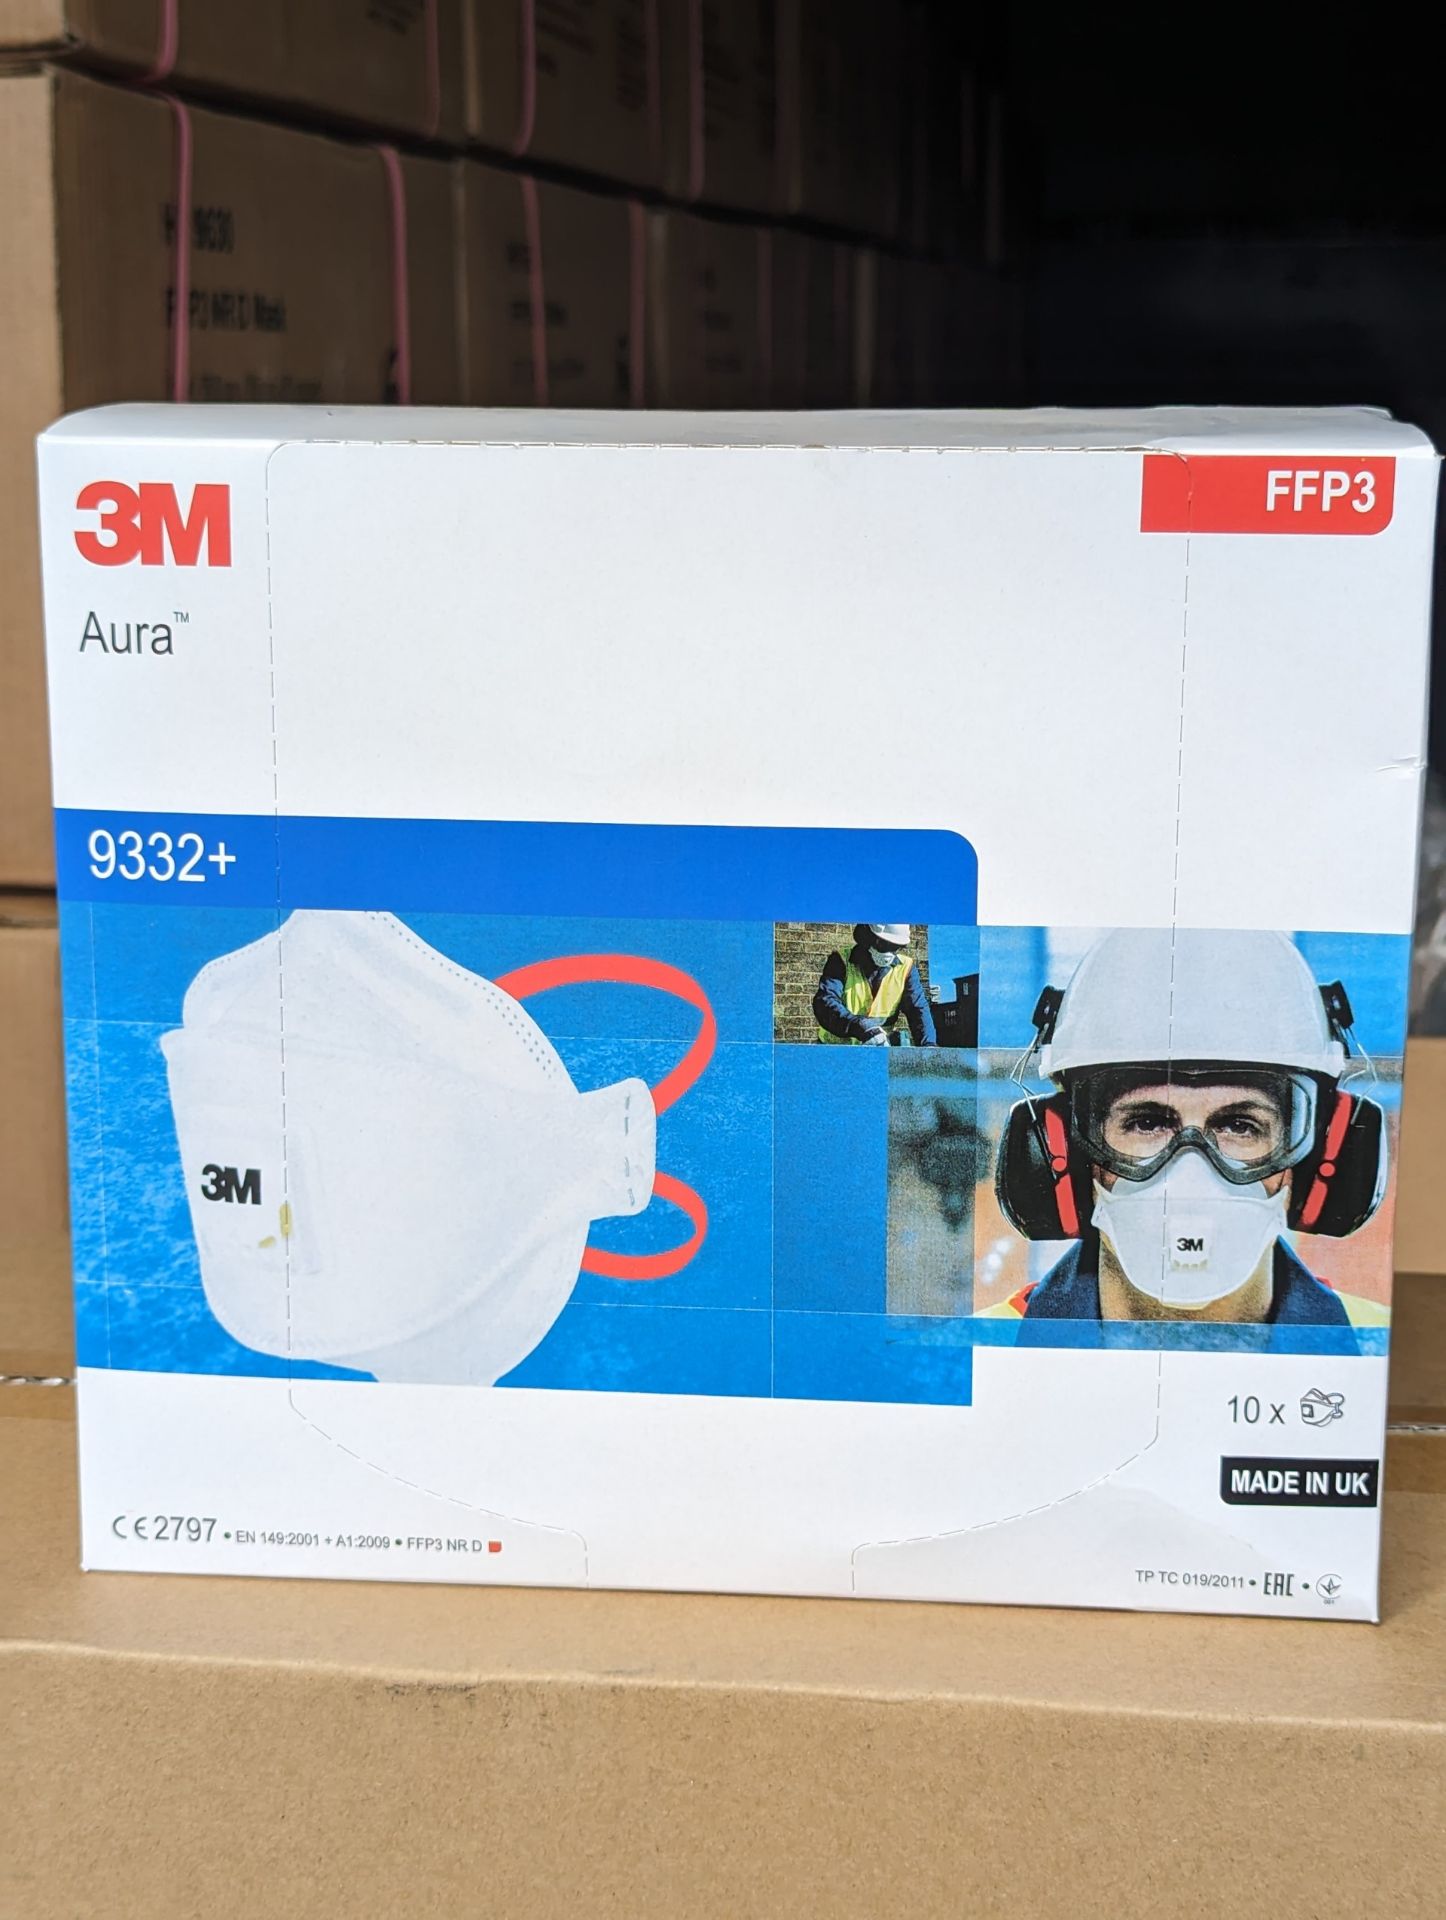 3M Aura 9332+ FFP3 Particulate filter Masks - box of 120 units. - Image 2 of 4